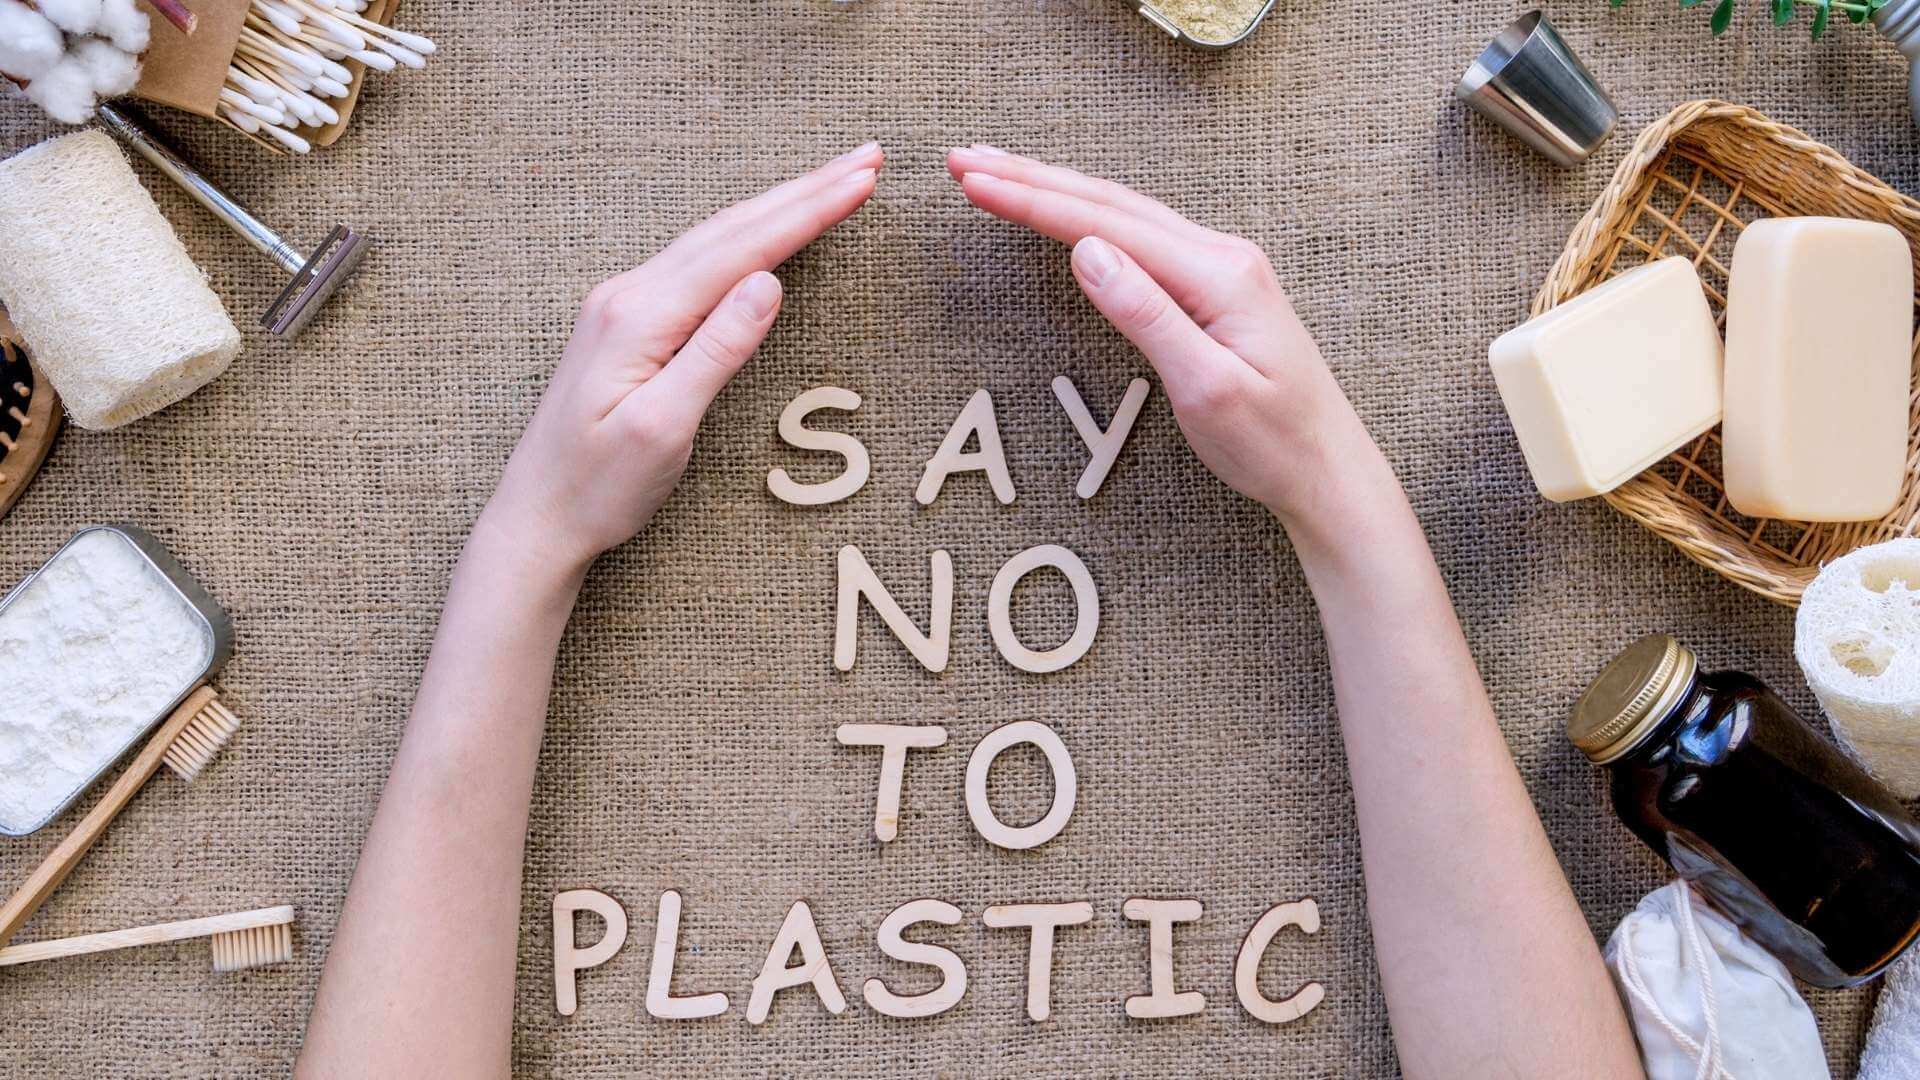 https://www.implasticfree.com/wp-content/uploads/2022/10/Avoid-Plastics-in-everyday-life.jpg